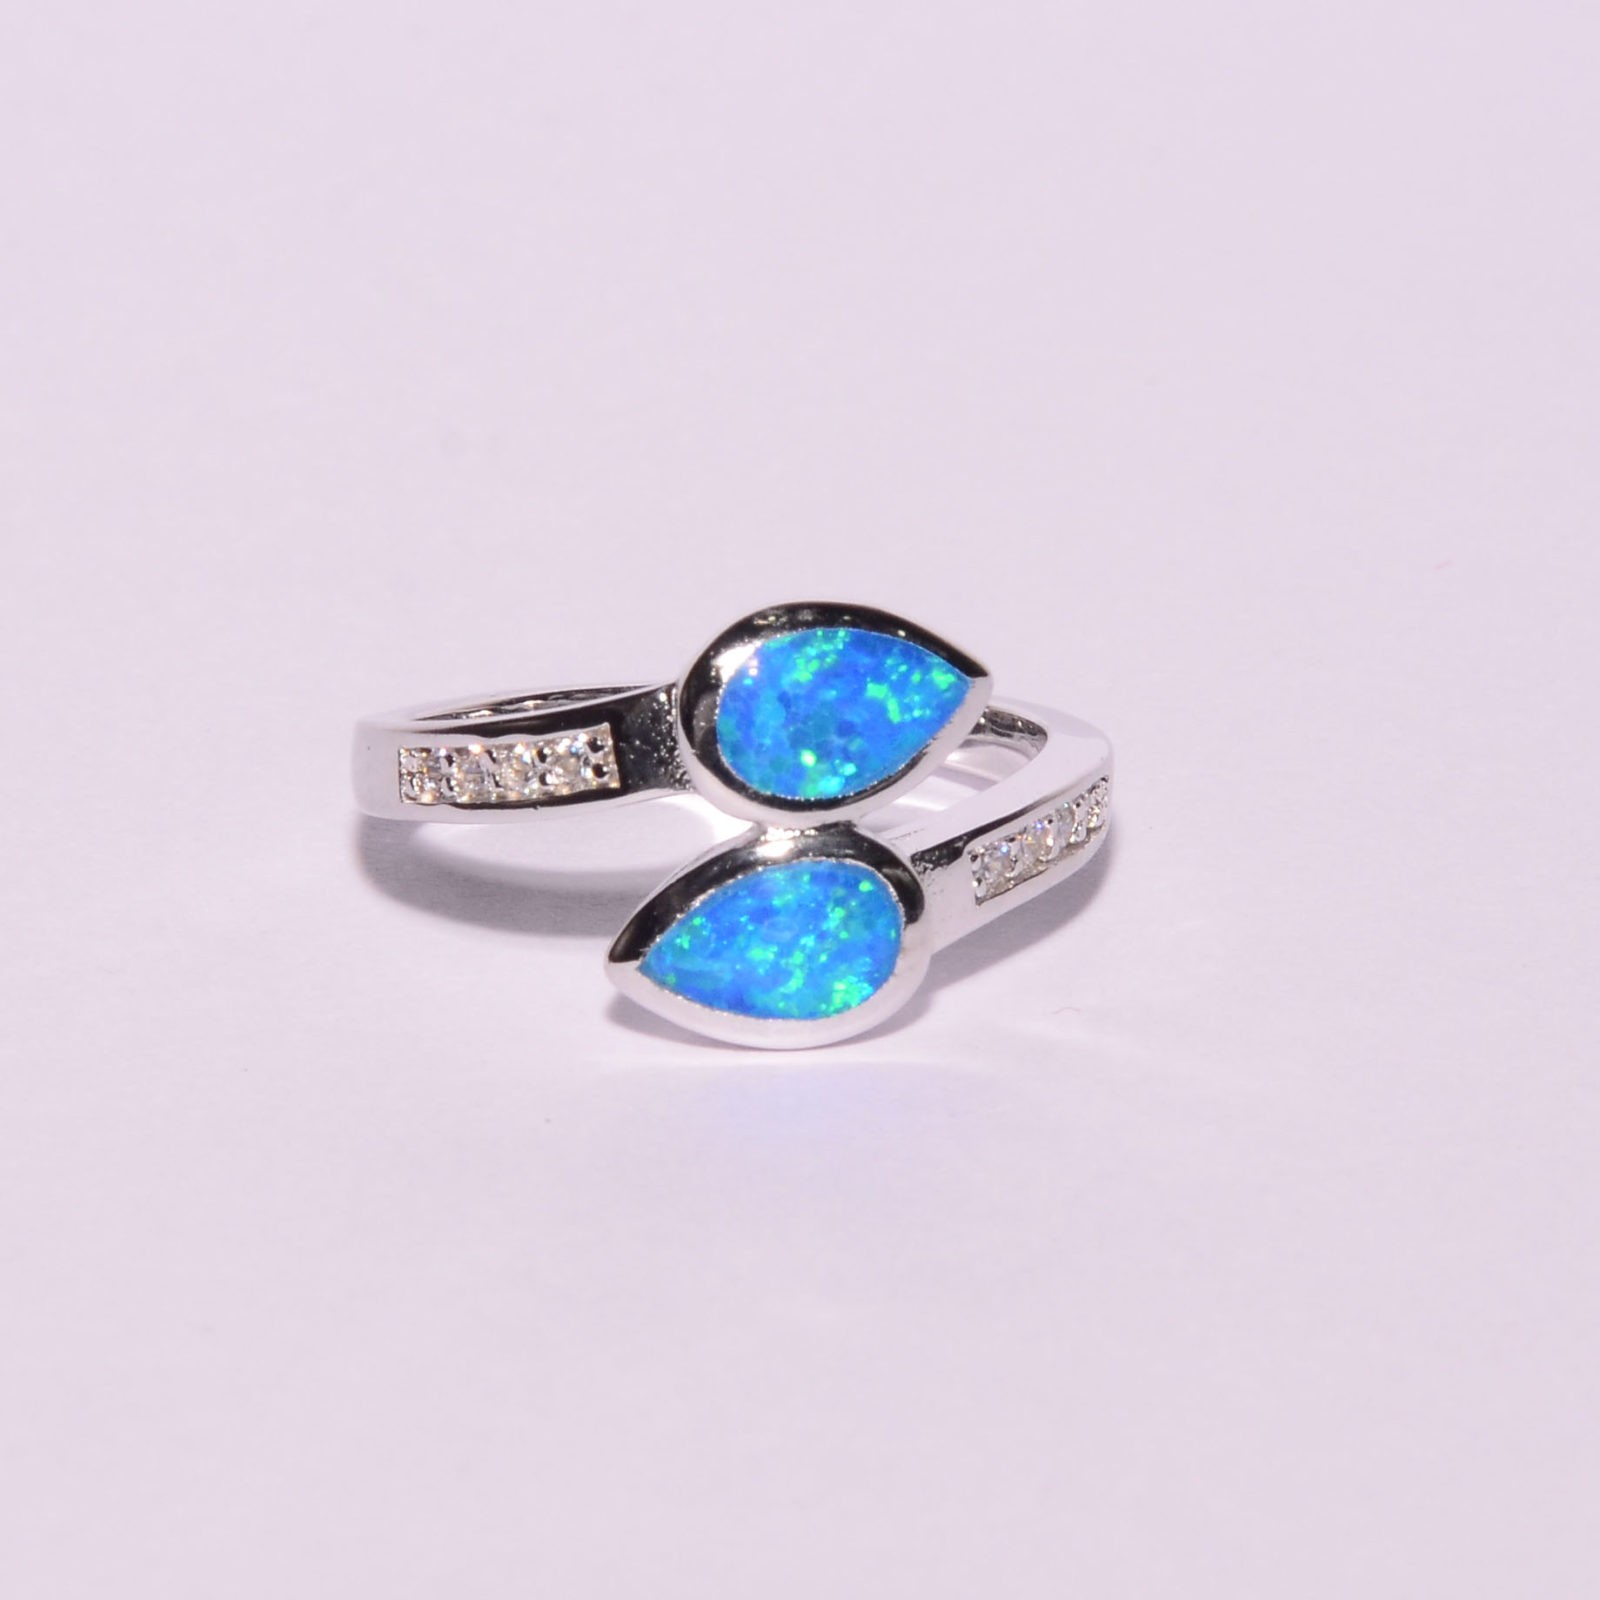 Buy Turquoise Stone Ring, Men's Turquoise Godfather Ring in Sterling  Silver, Turquoise Stone Ring for Men, Sky Blue Life Stone Silver Ring Men,  Online in India - Etsy